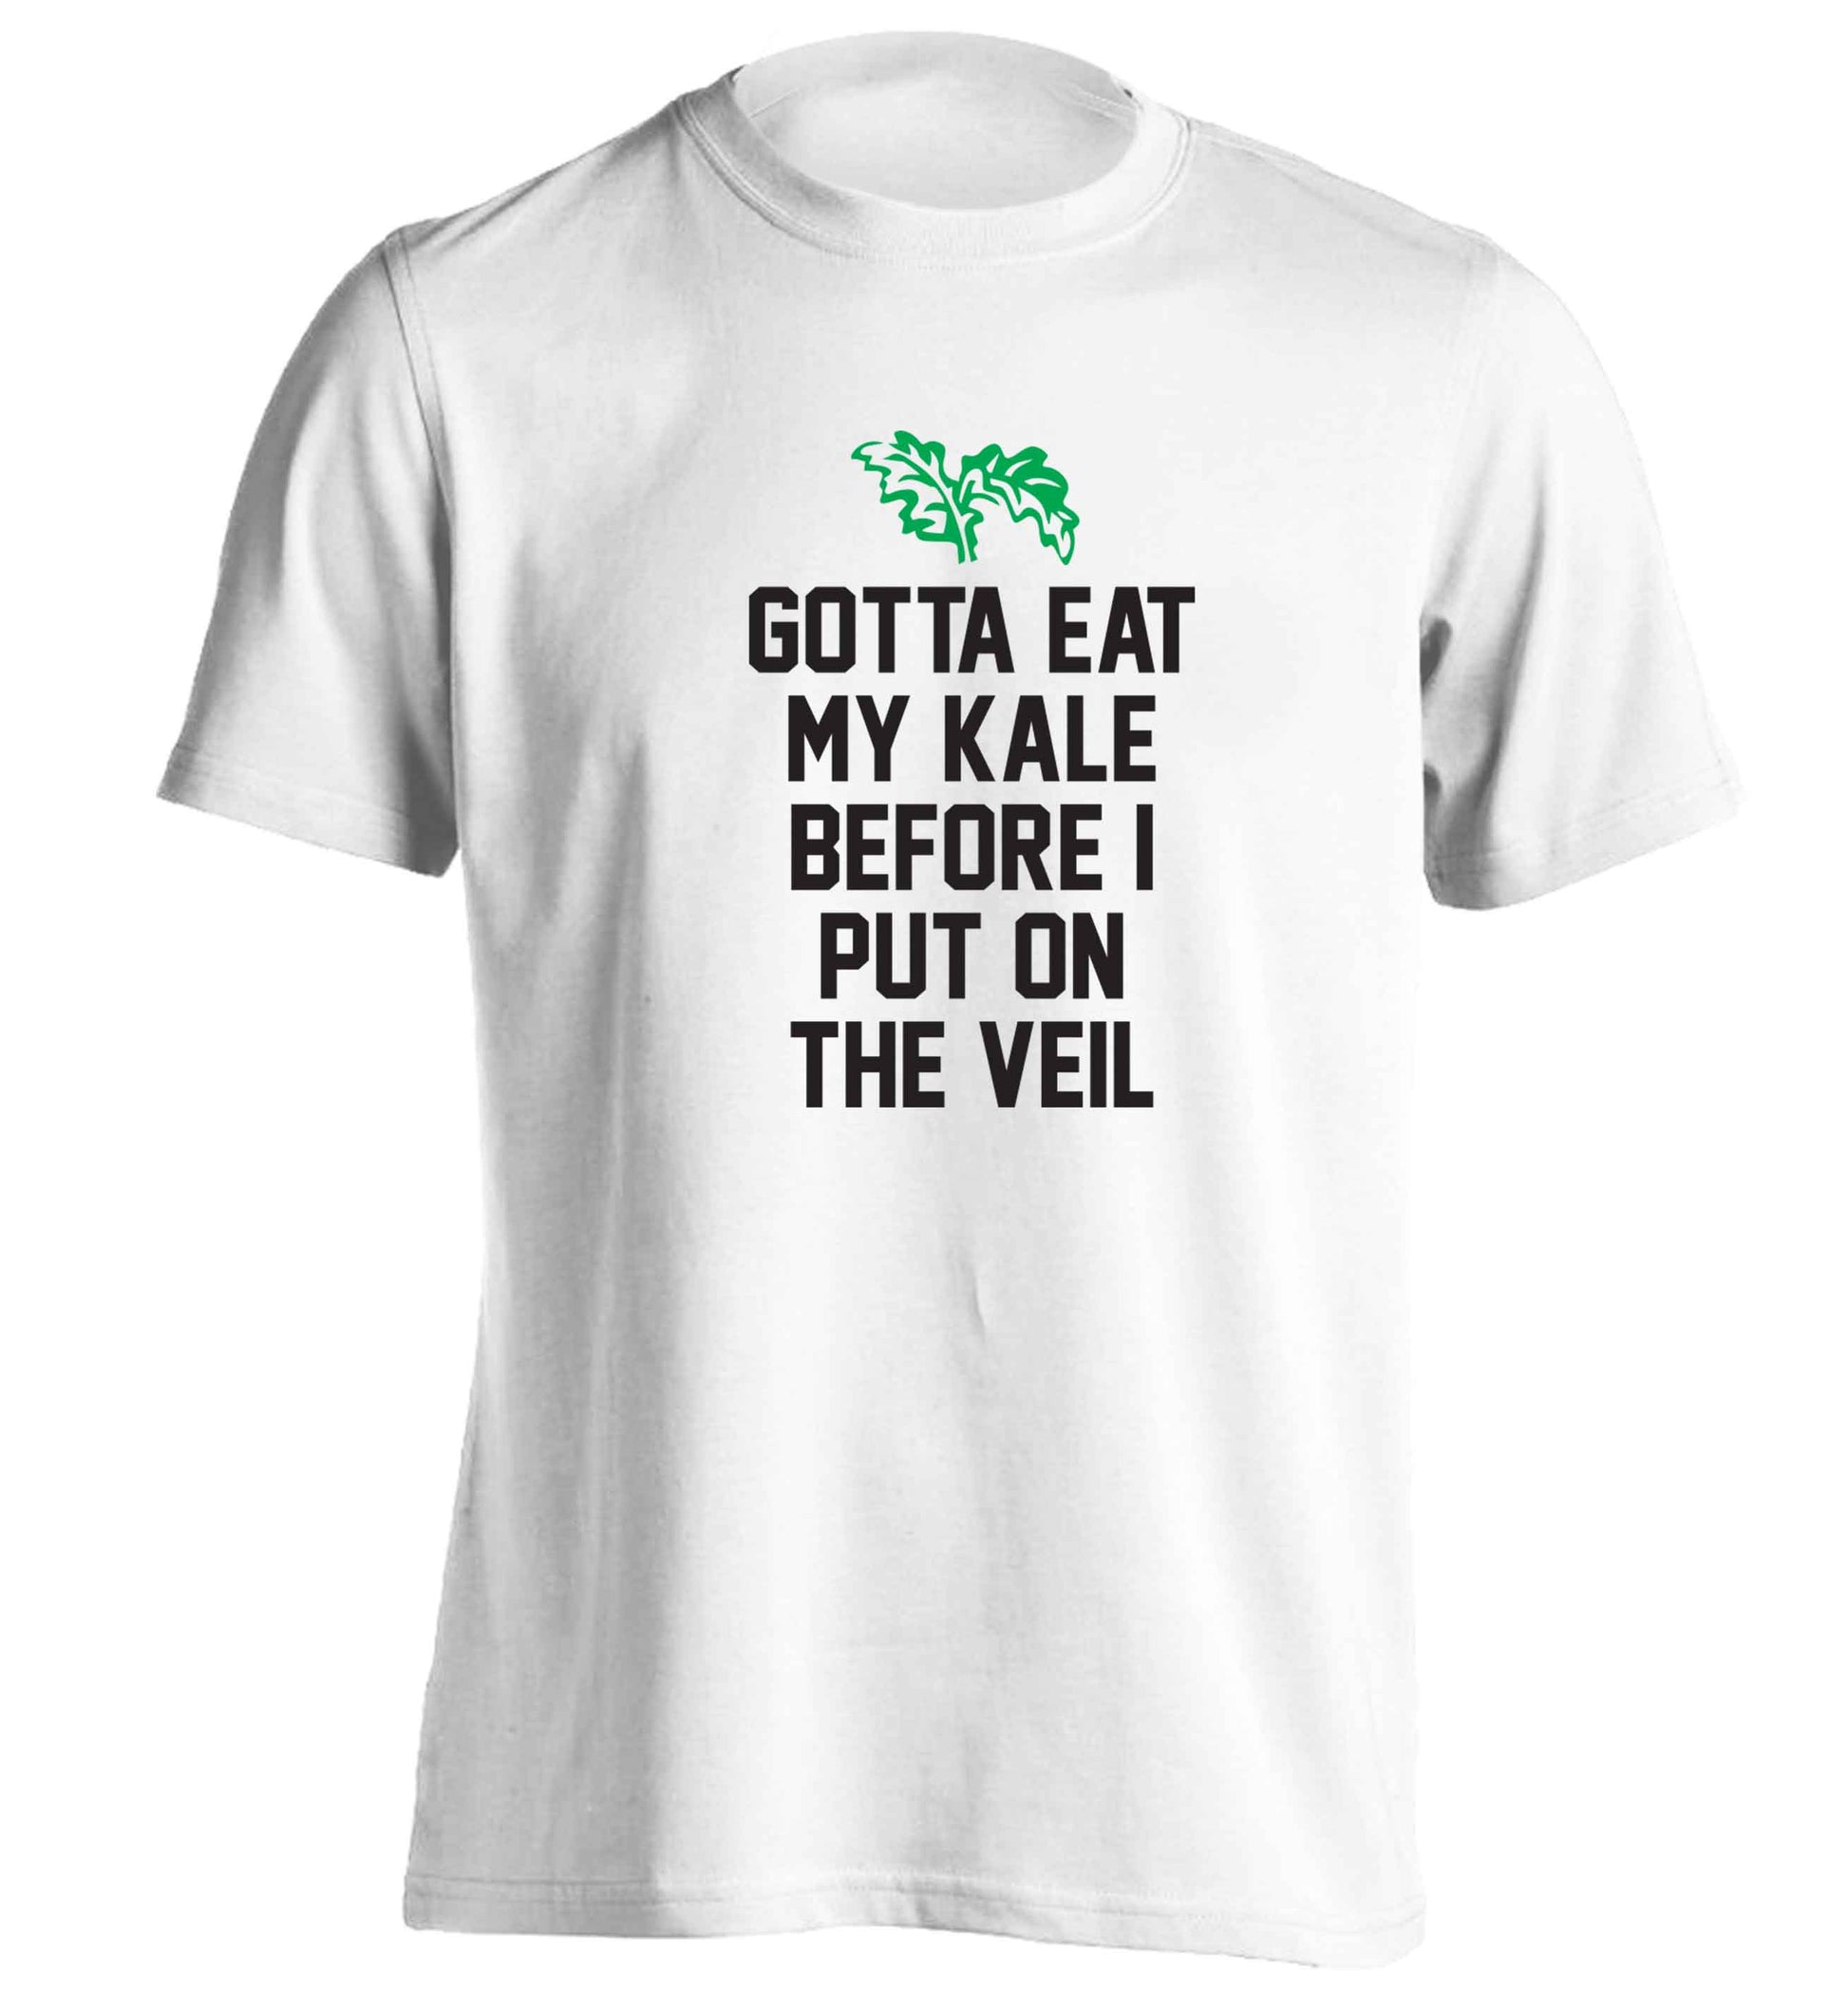 Gotta eat my kale before I put on the veil adults unisex white Tshirt 2XL